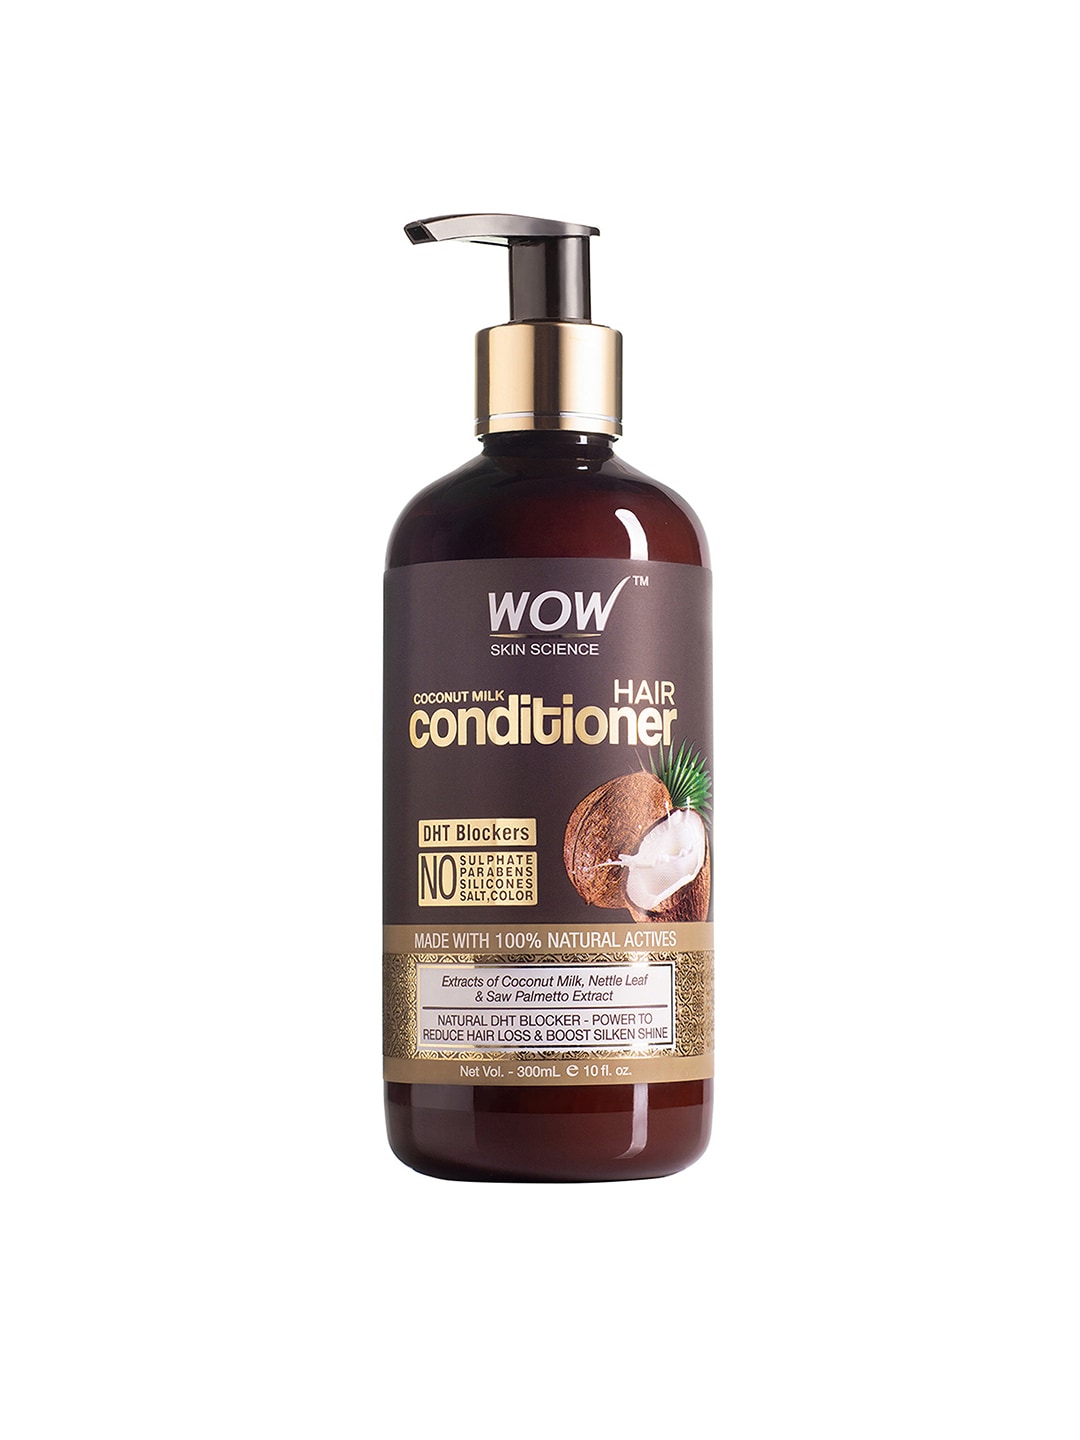 WOW Skin Science Coconut Milk Conditioner - 300 ml Price in India